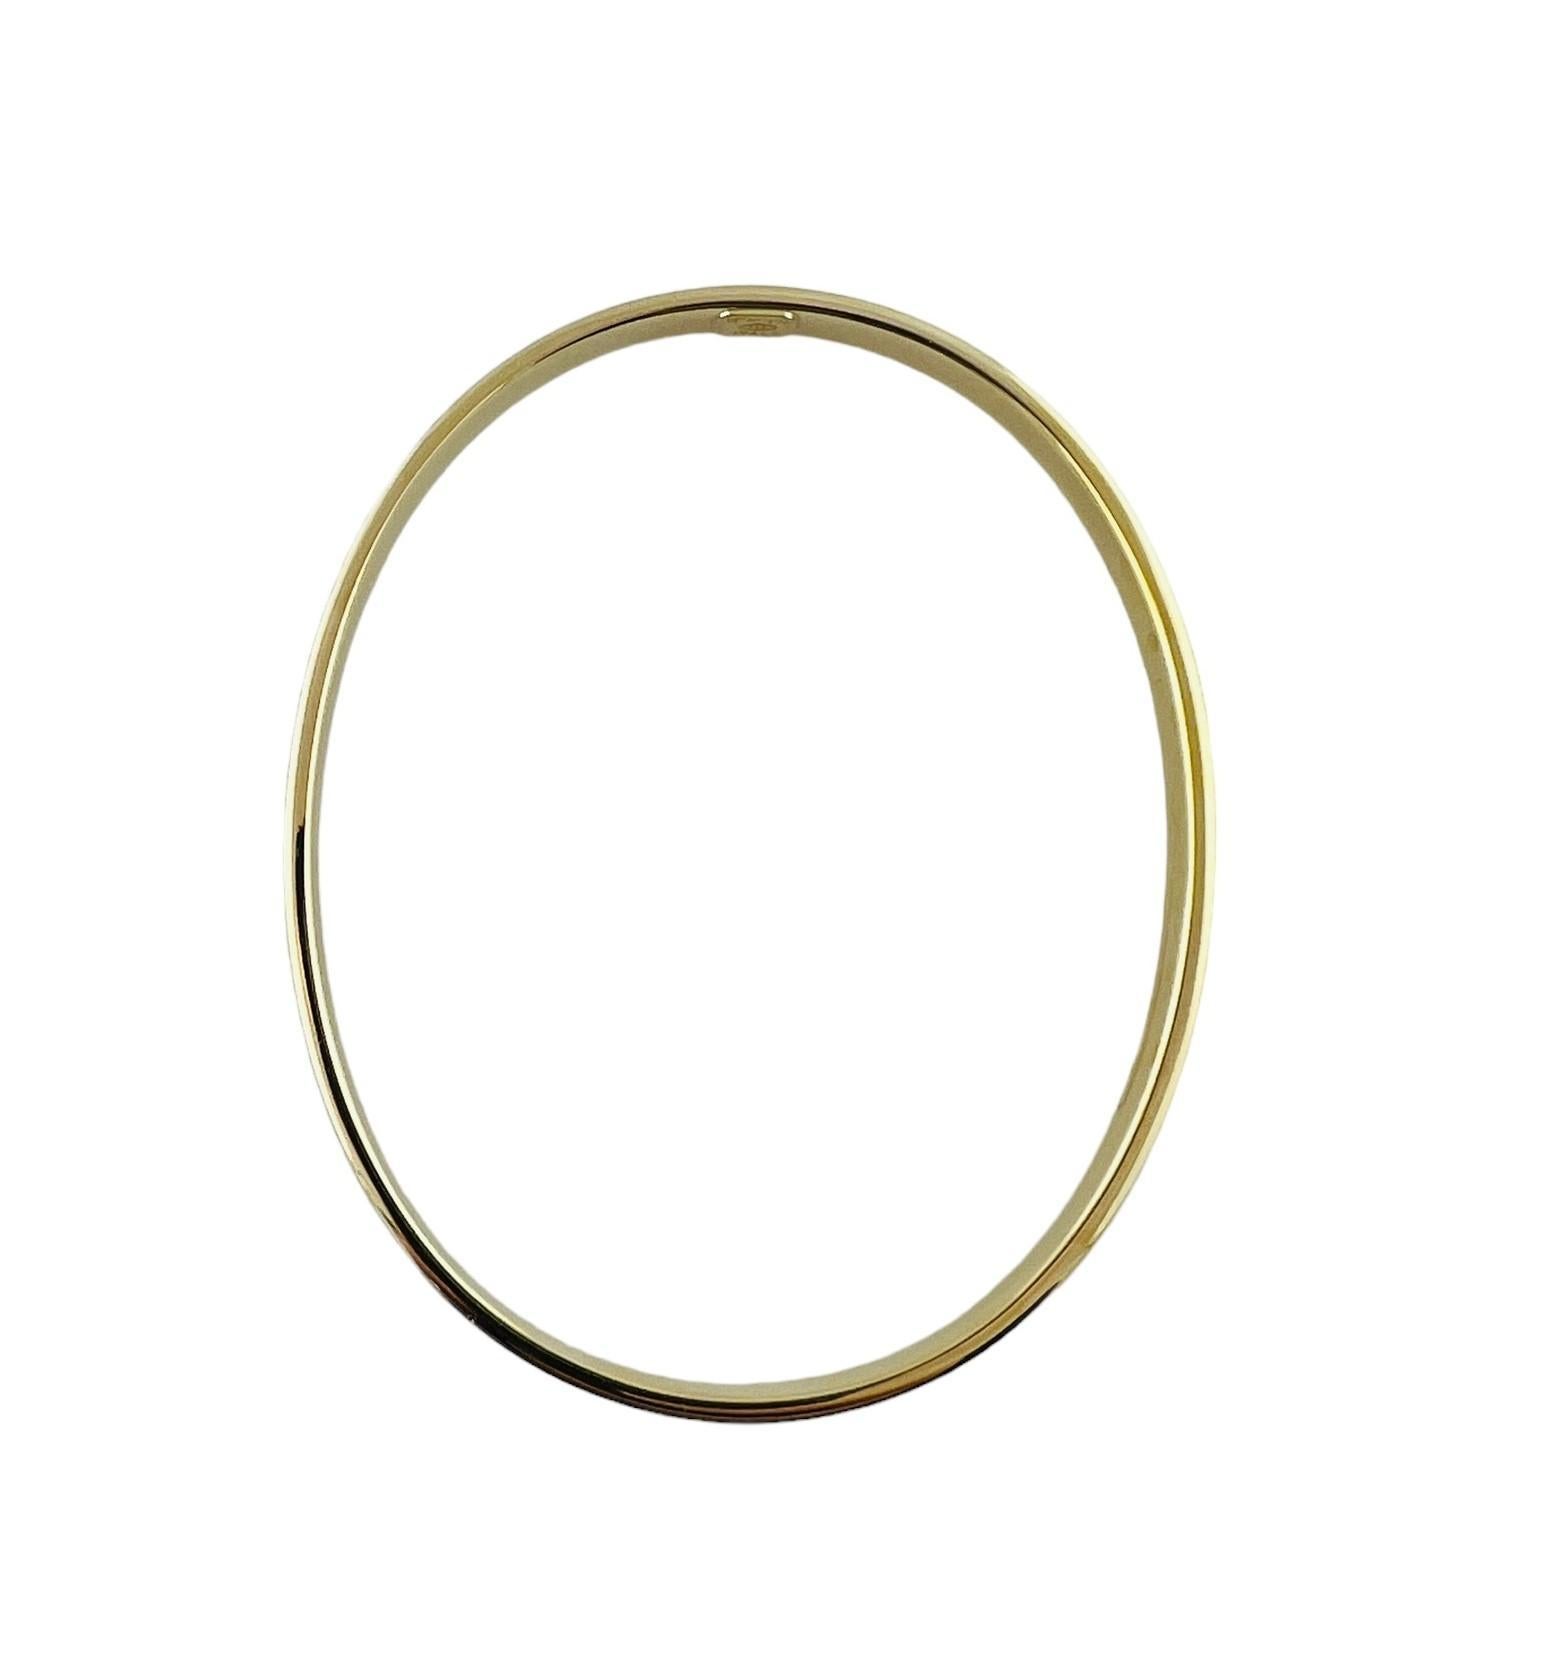 Tiffany & Co. 18K Yellow Gold Oval Bangle Bracelet #16676 1